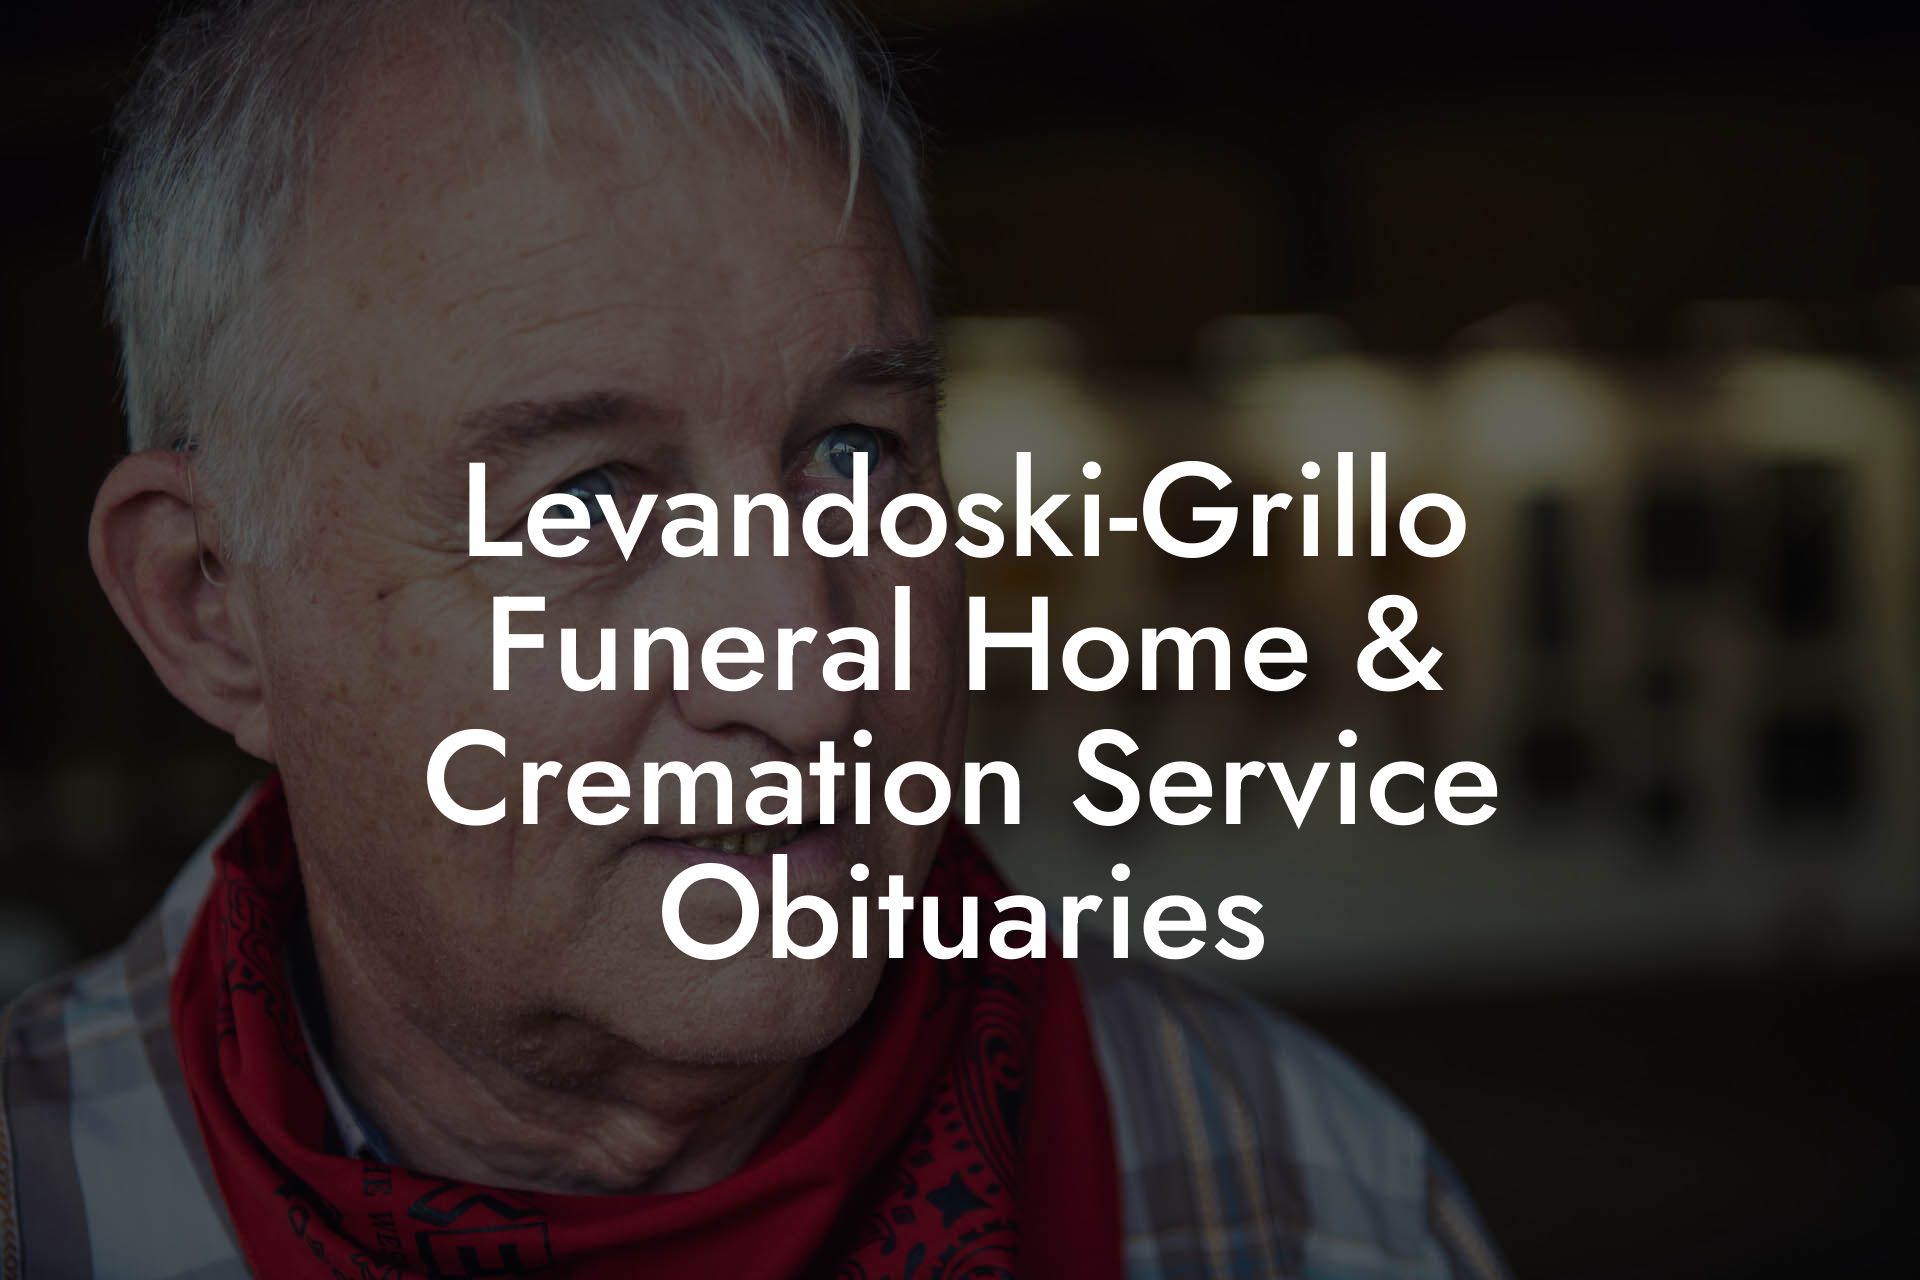 Levandoski-Grillo Funeral Home & Cremation Service Obituaries